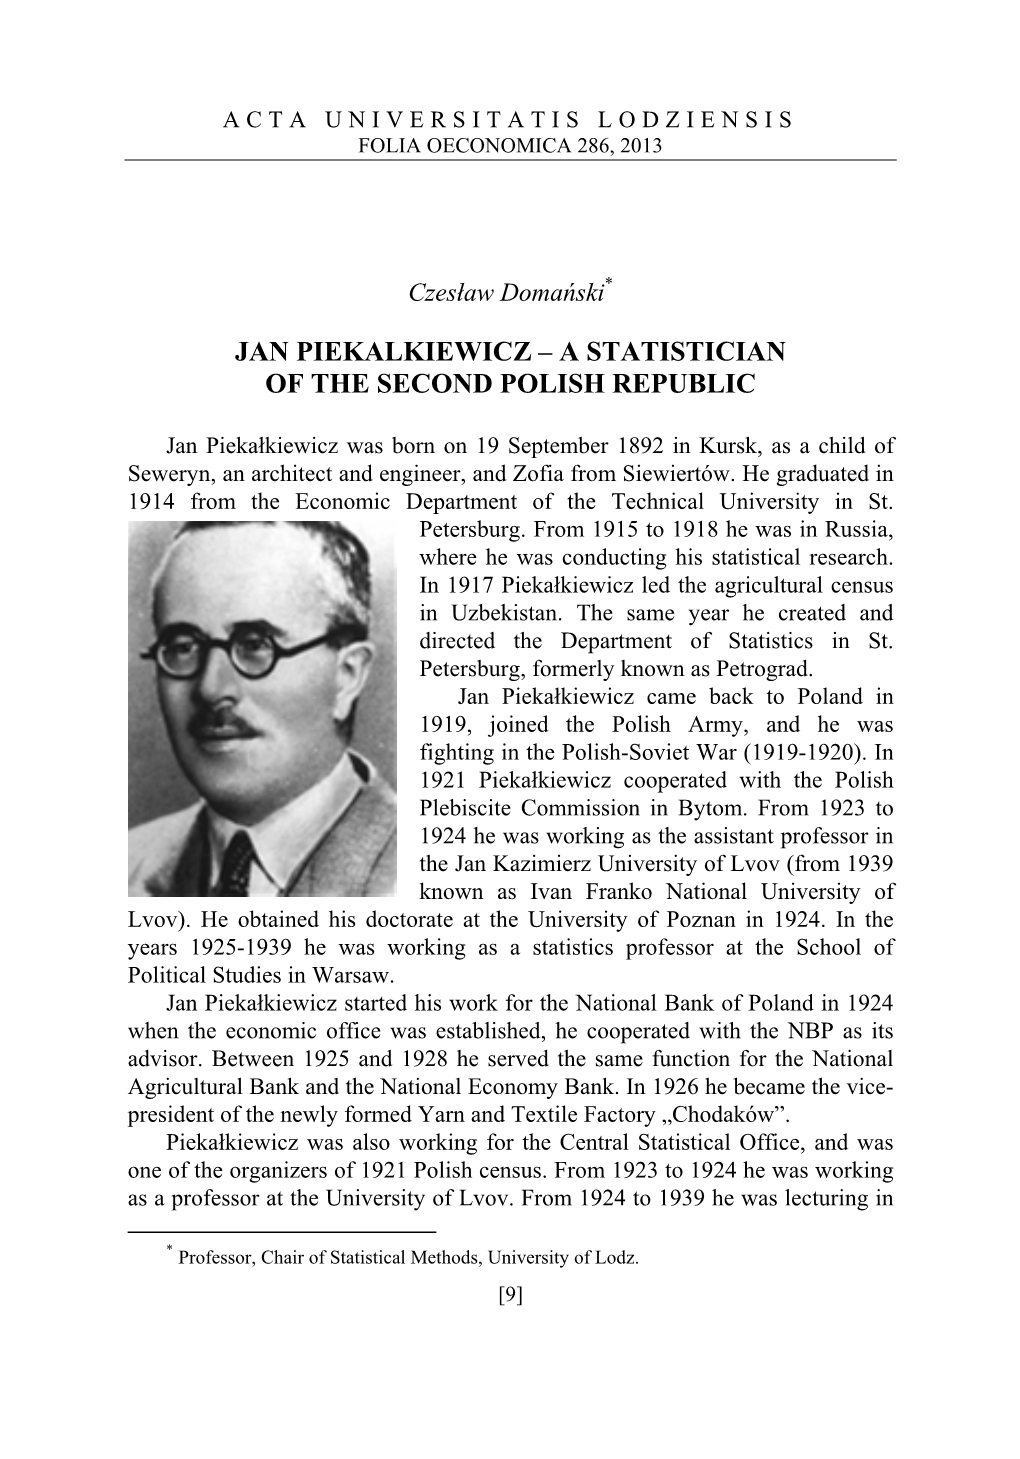 Jan Piekalkiewicz – a Statistician of the Second Polish Republic